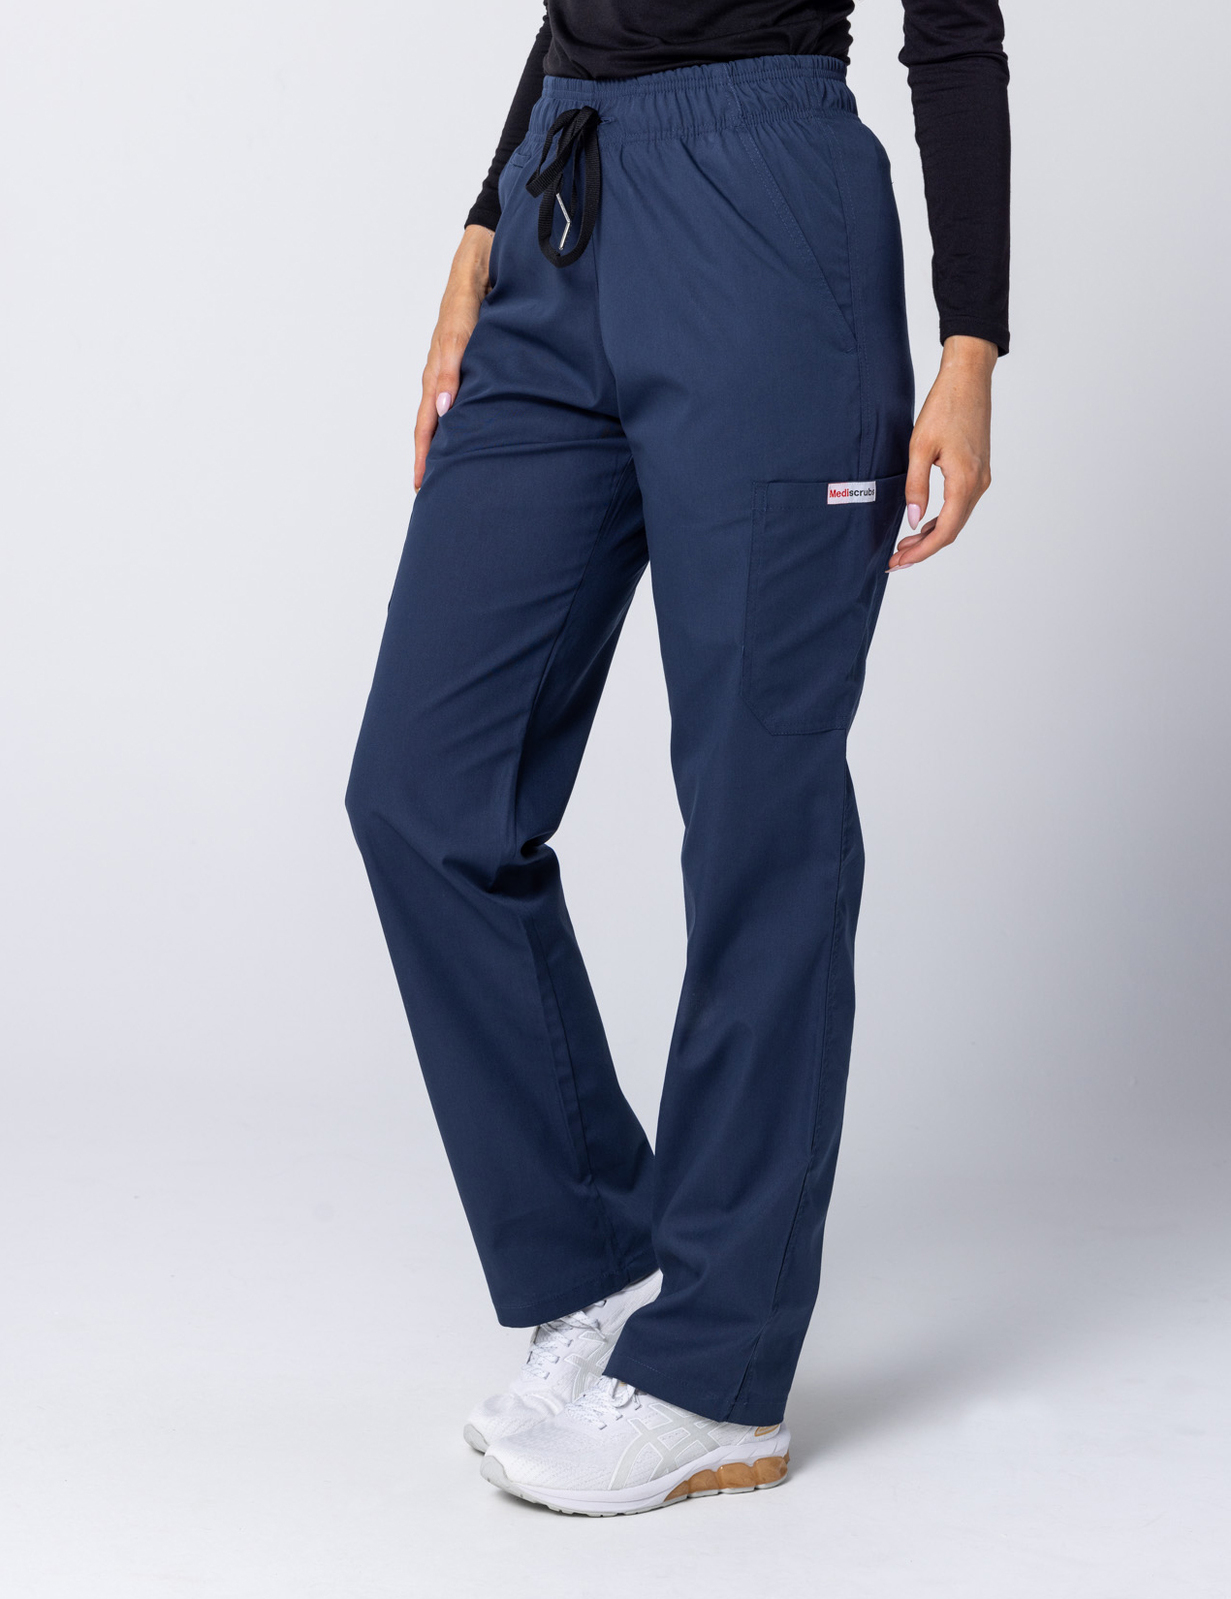 Women's Cargo Performance Pants - Navy - 4X large